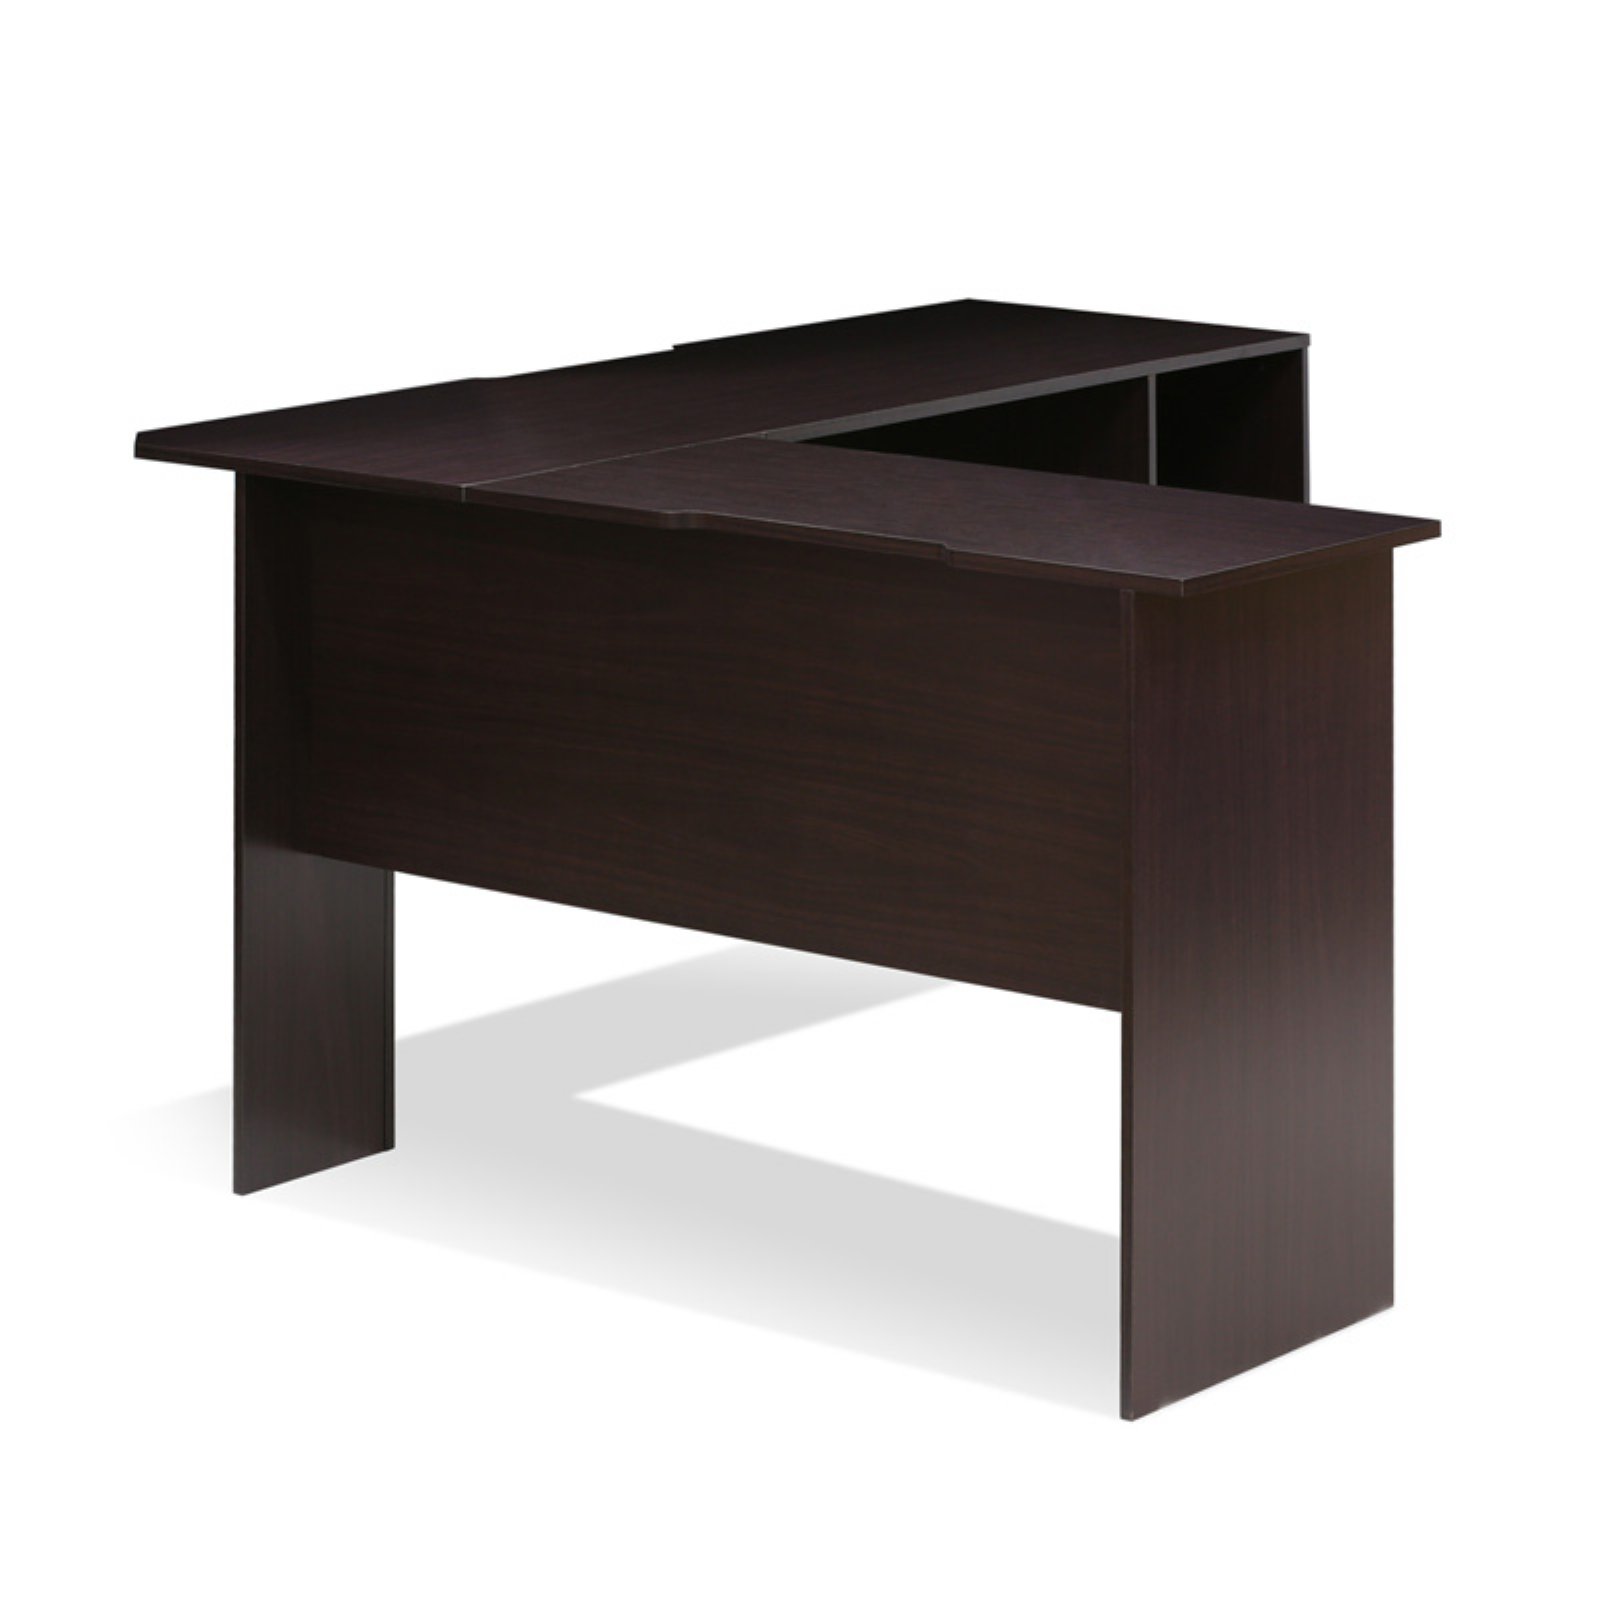 Furinno Indo L-Shaped Desk with Bookshelves, Espresso - image 3 of 8